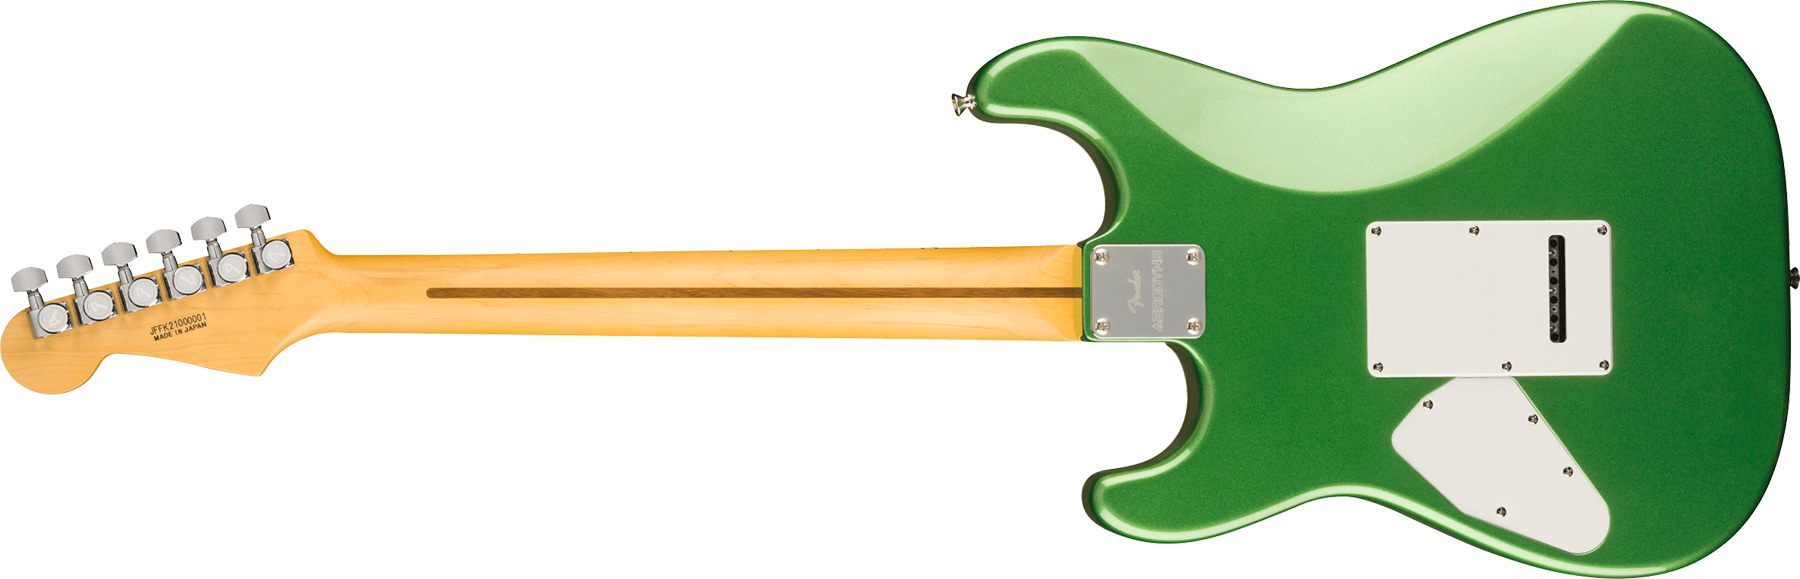 Fender Strat Aerodyne Special Jap Trem Hss Mn - Speed Green Metallic - E-Gitarre in Str-Form - Variation 1